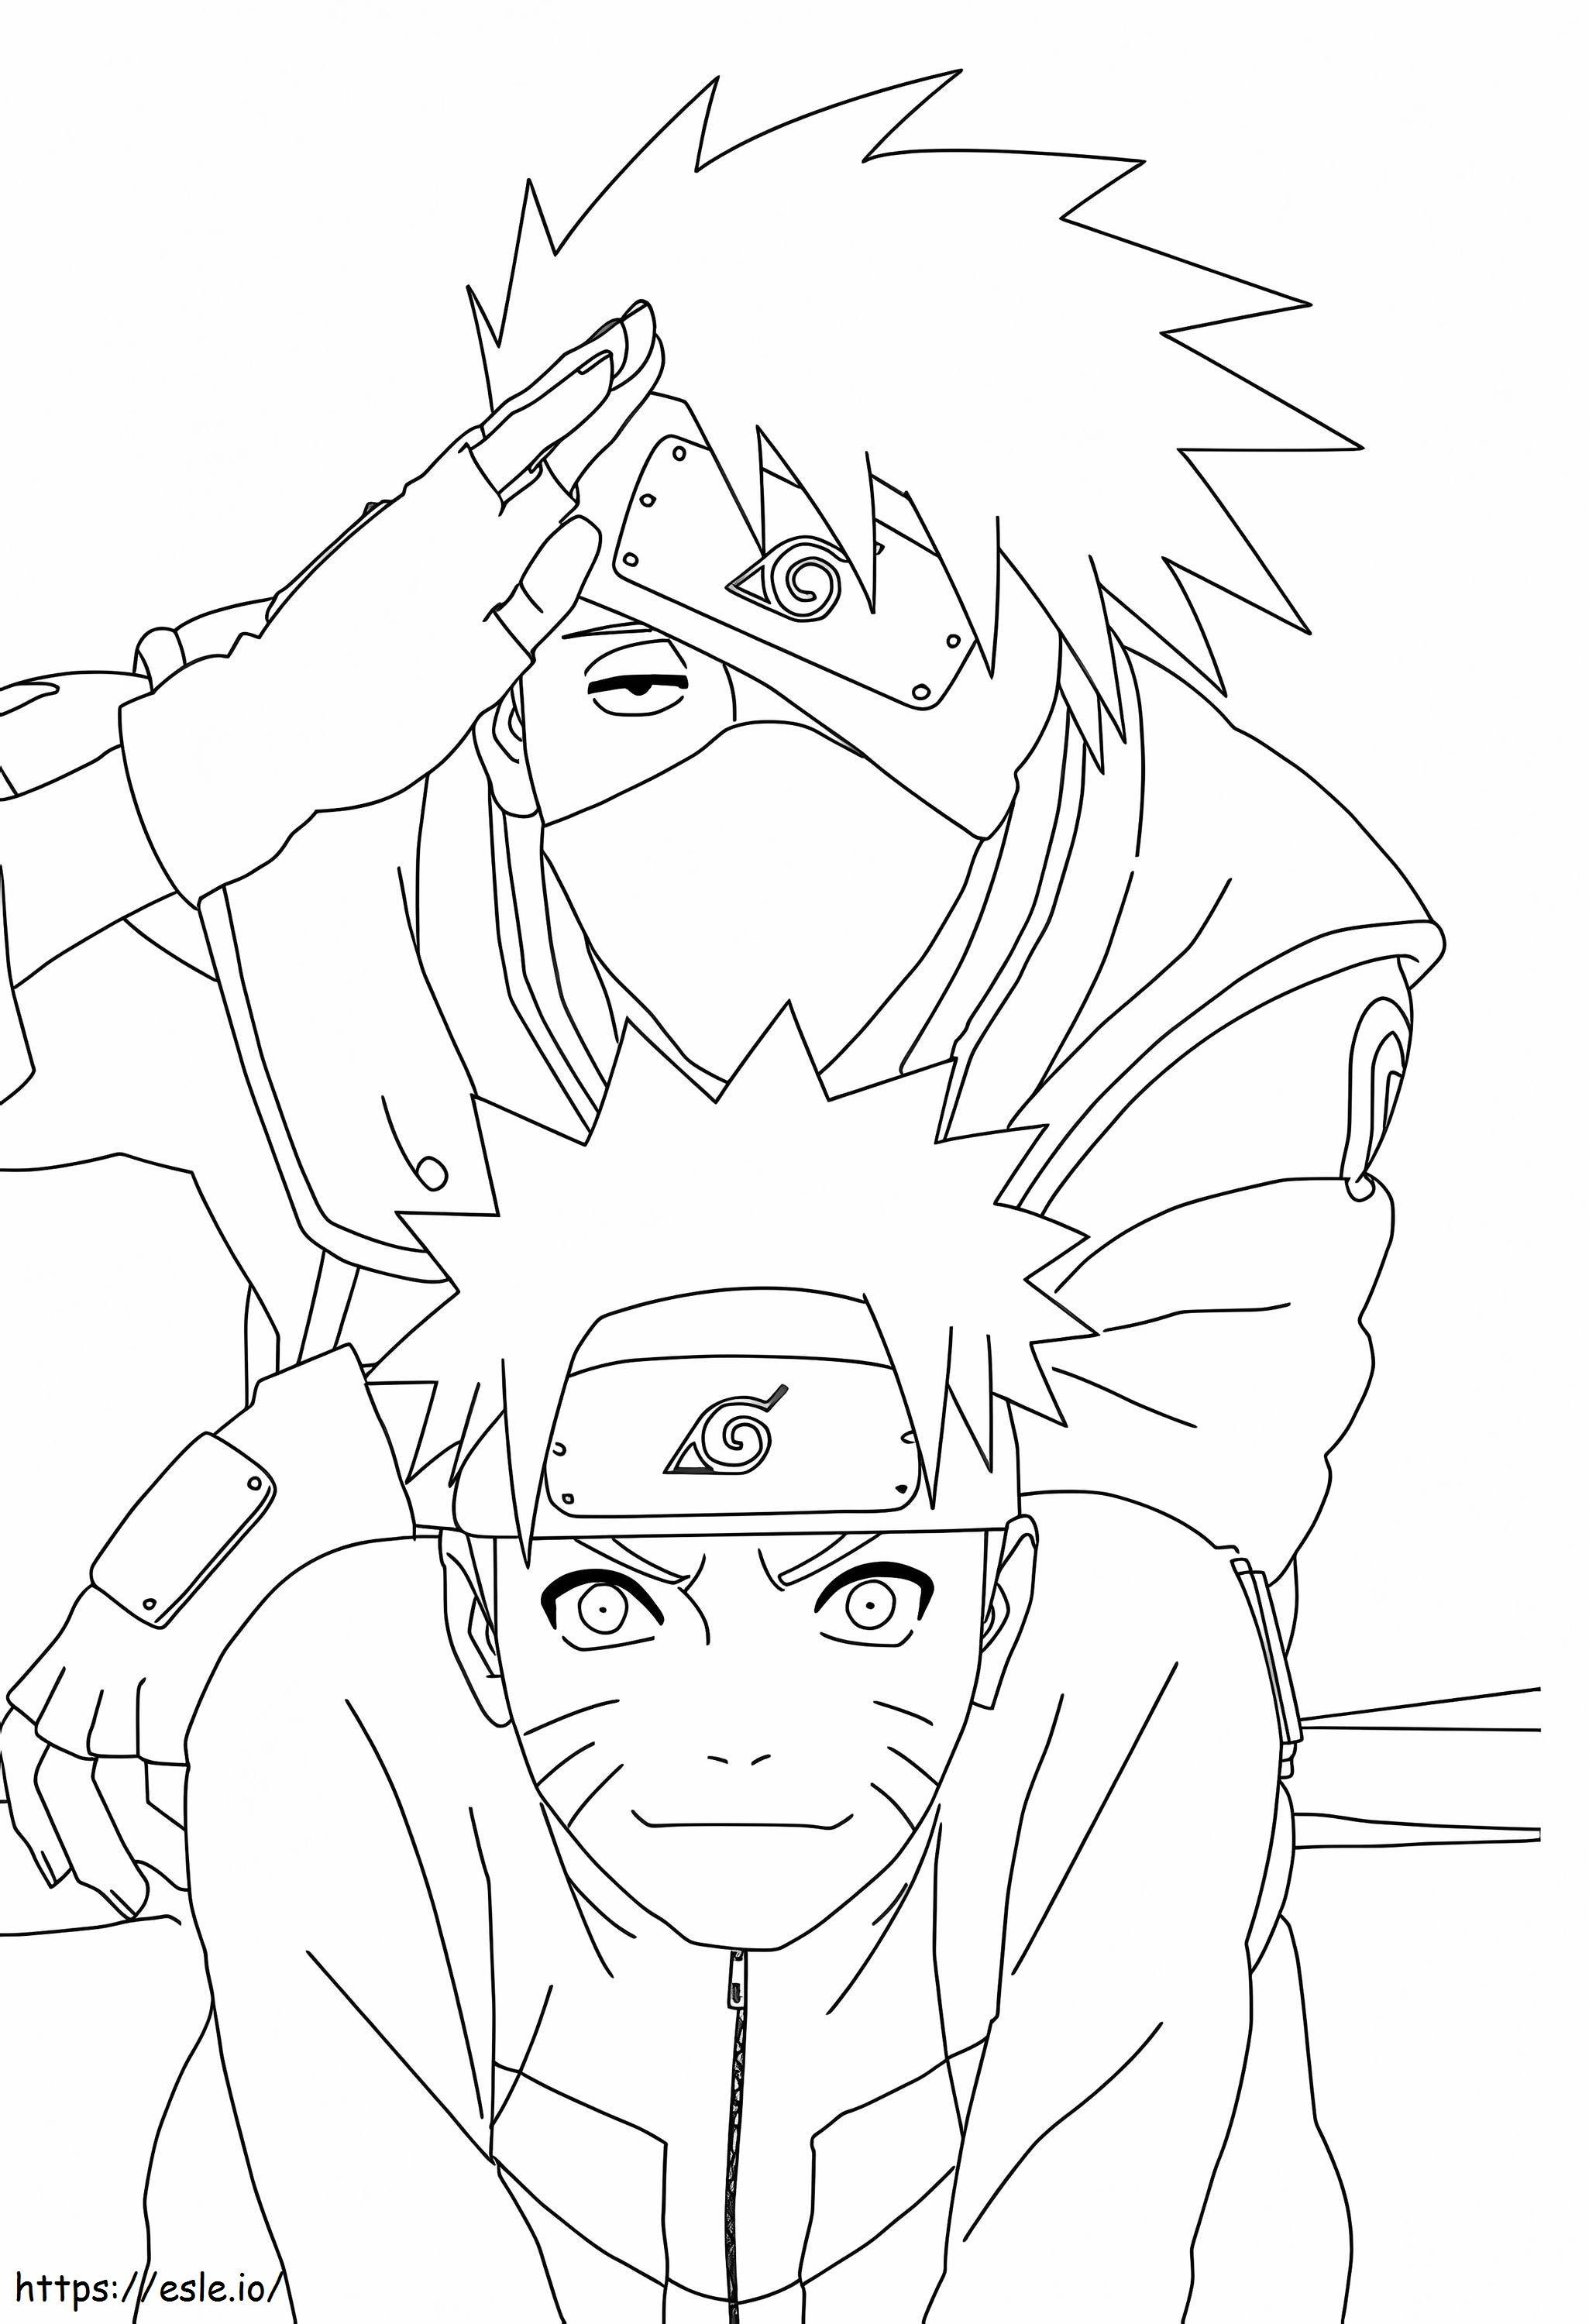 Naruto und Kakashi ausmalbilder